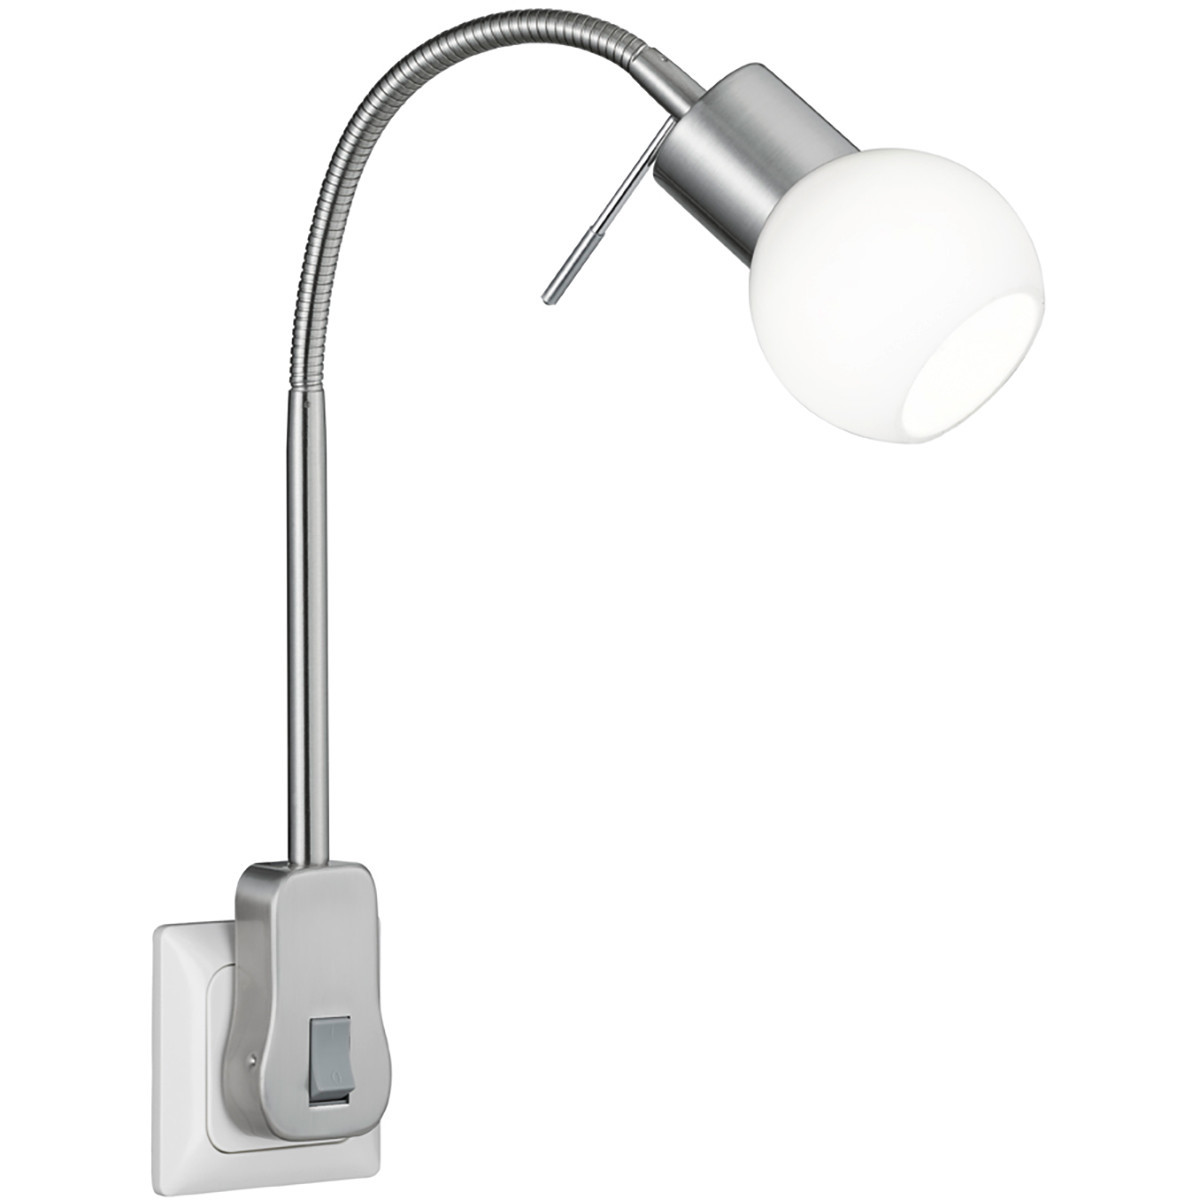 Stekkerlamp met Schakelaar - Trion Frido - G9 Fitting - 3W - Warm Wit 3000K - Dimbaar - Mat Nikkel - Aluminium